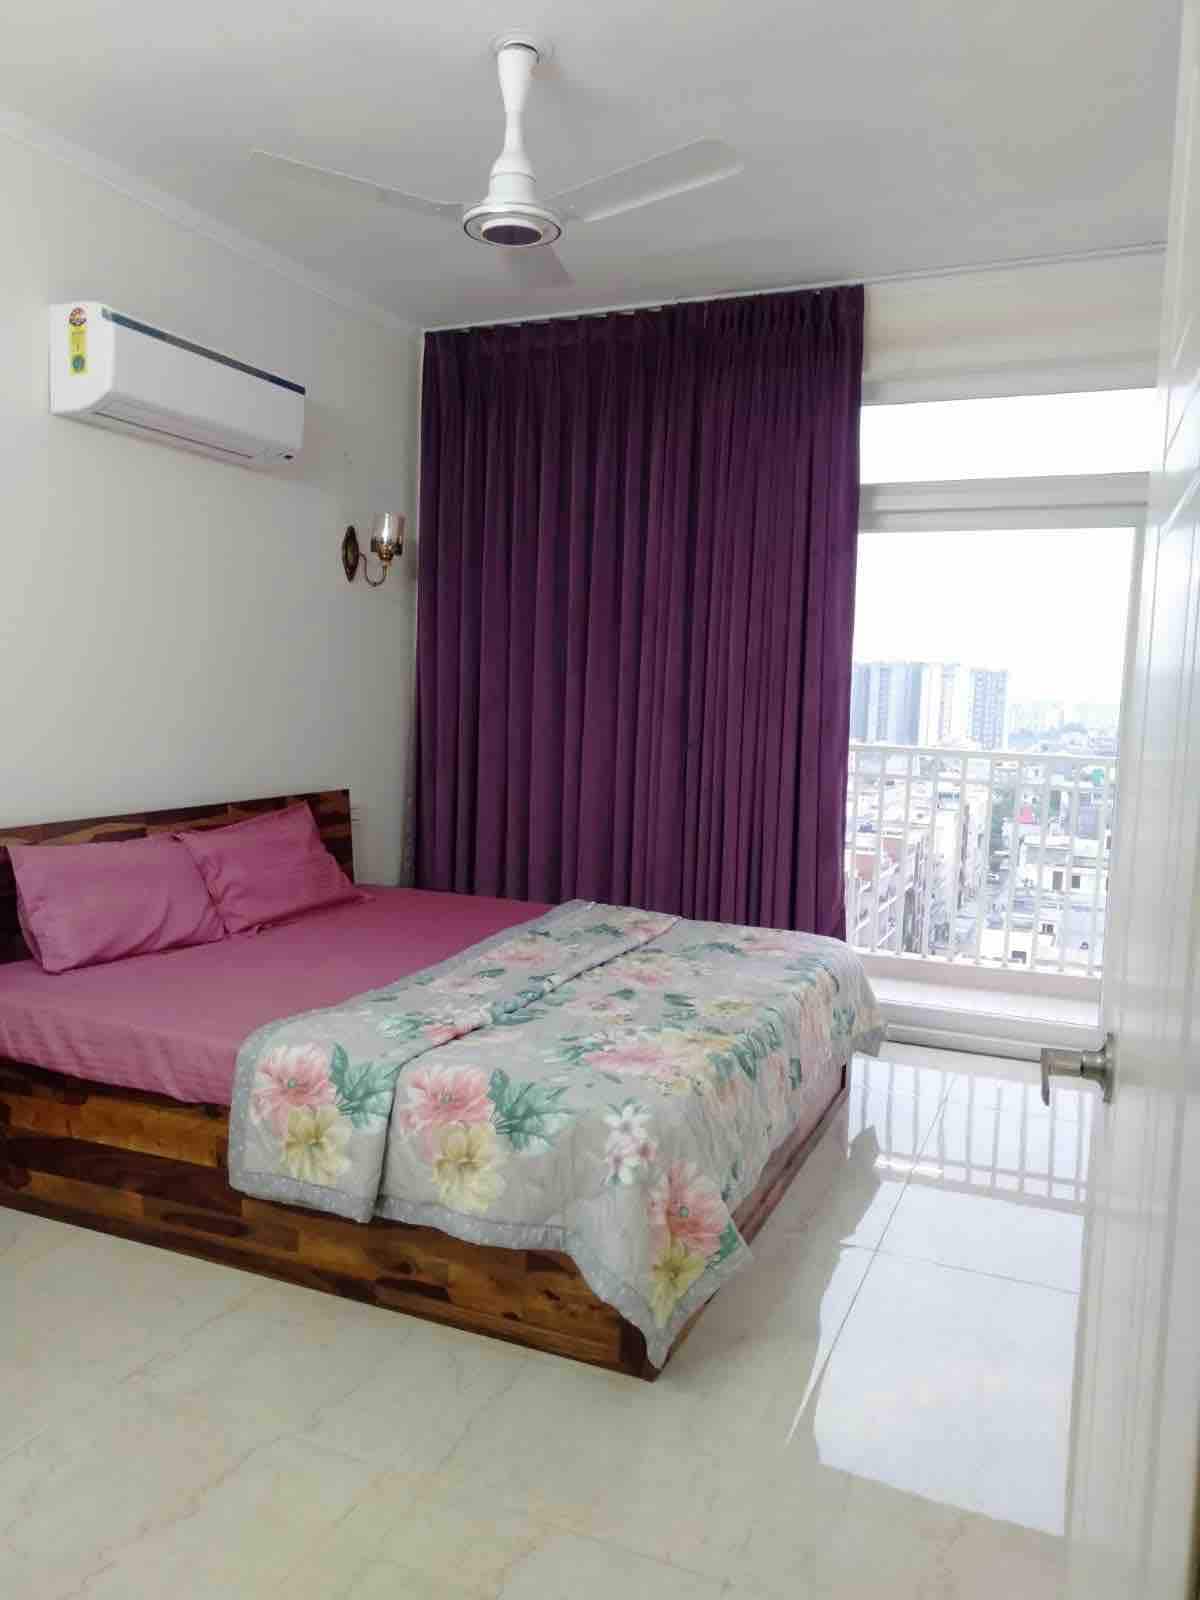 Homely 3 bedroom apartment in  heart of Zirakpur